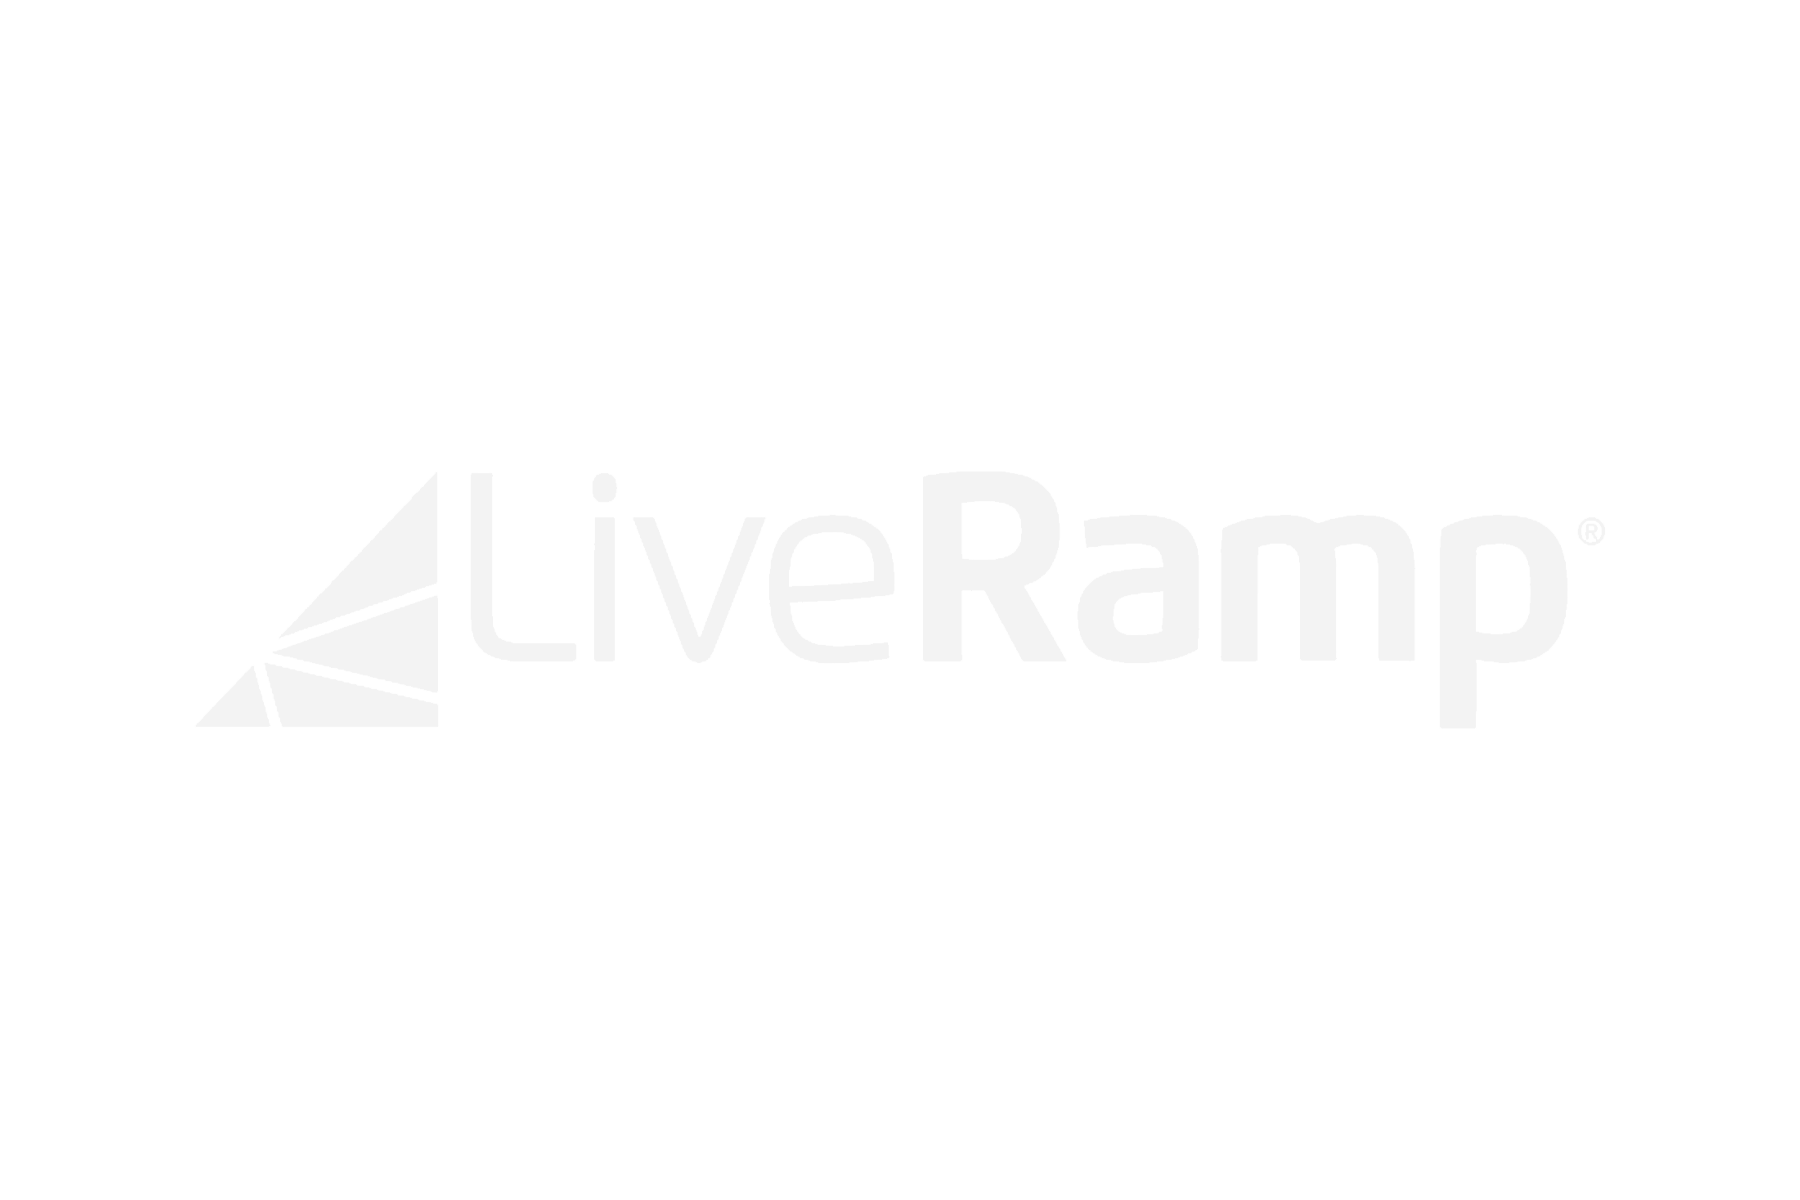 Live Ramp